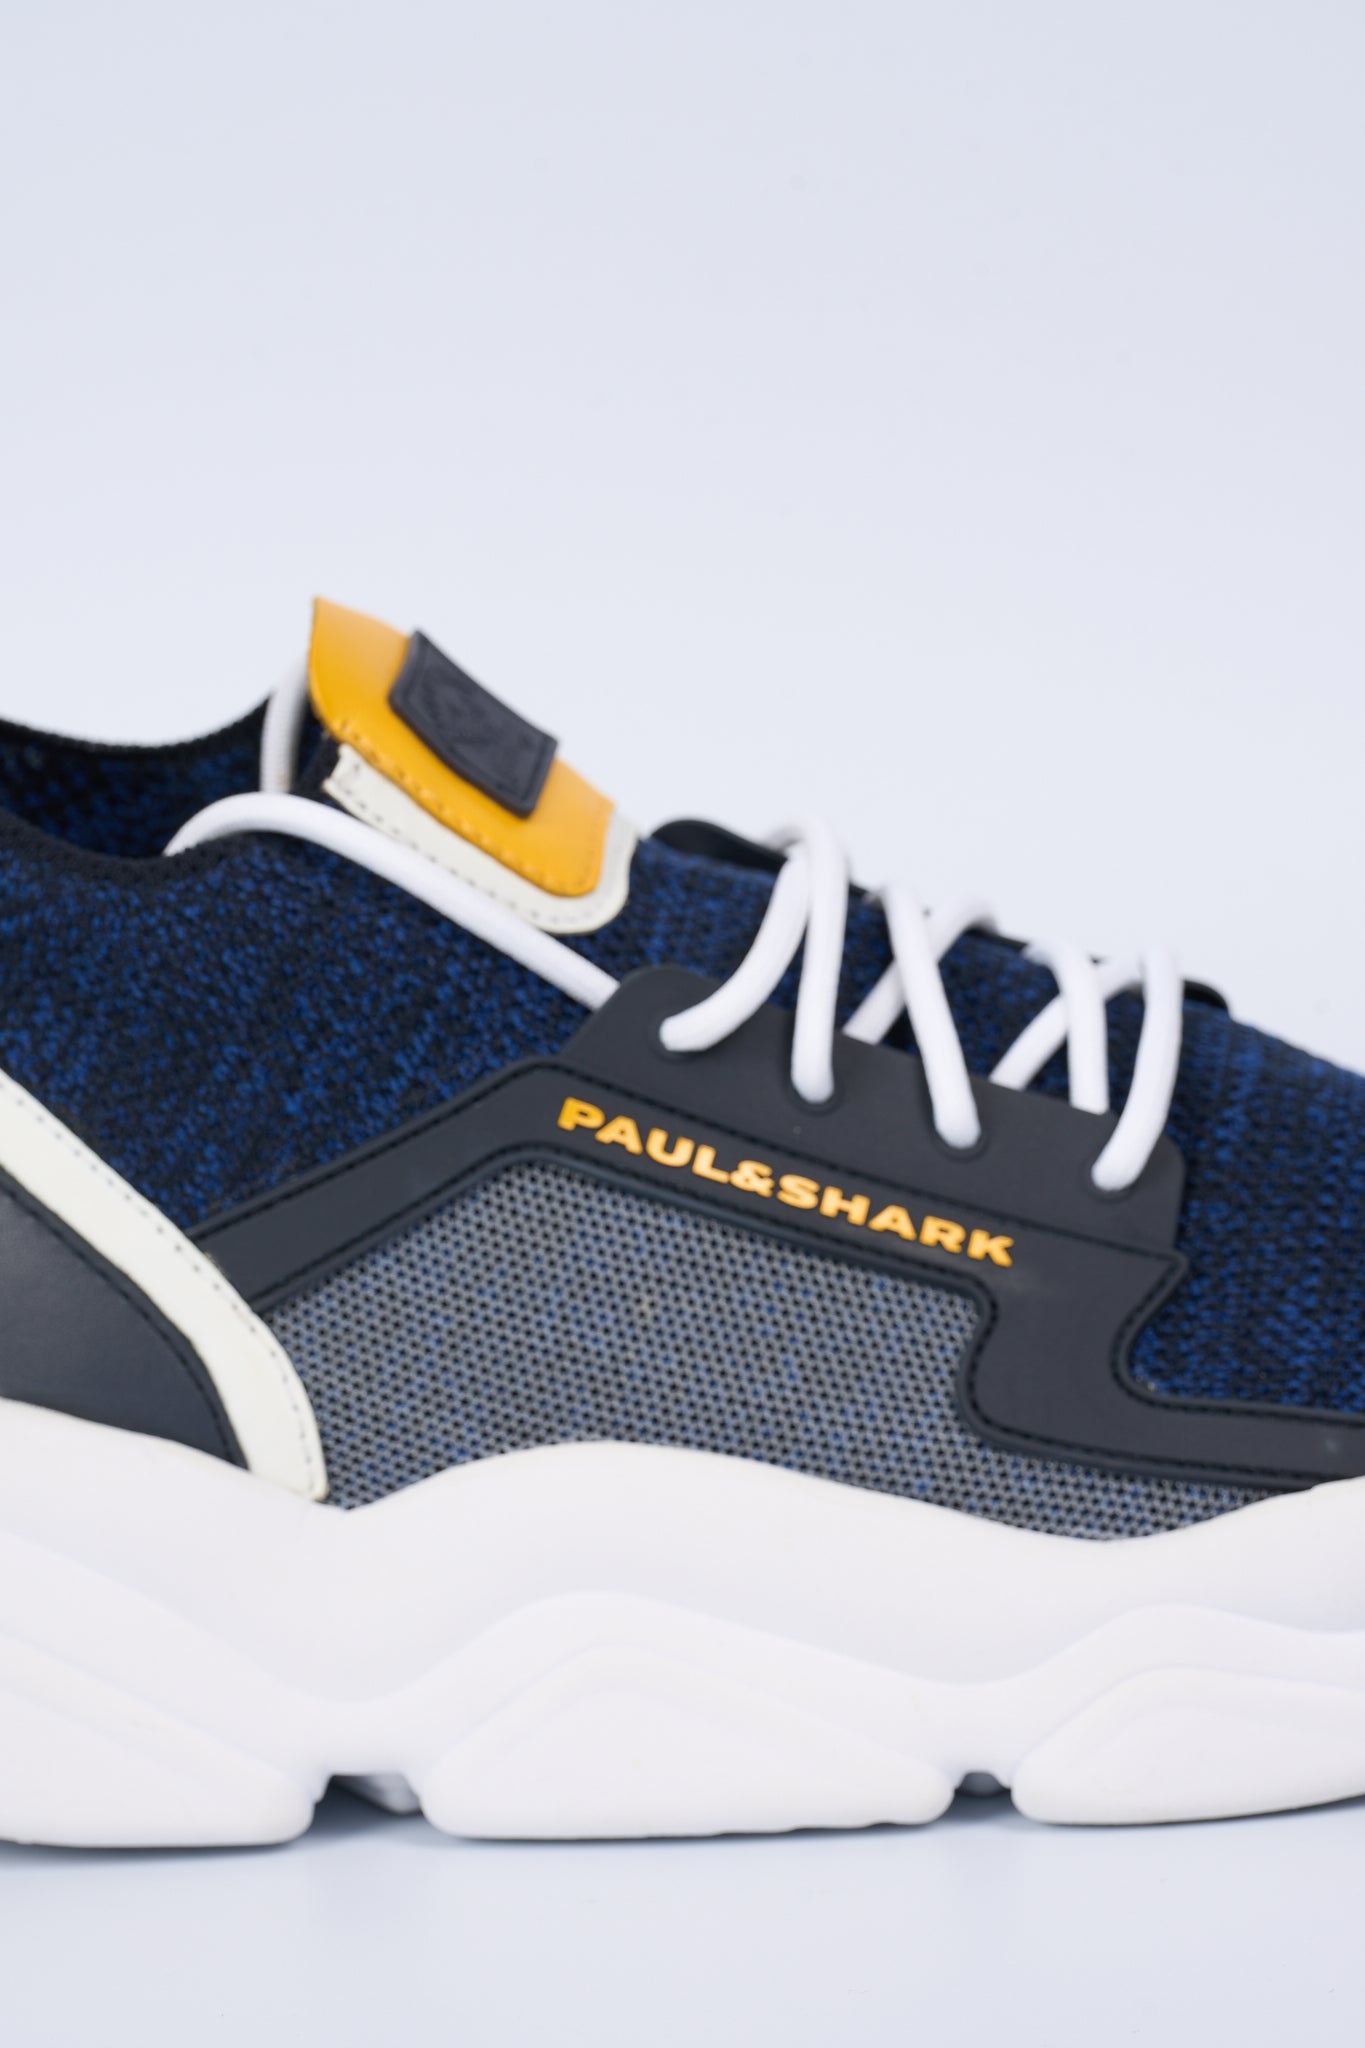 Paul&shark Sneaker Hybrid Blu/Giallo Uomo-5